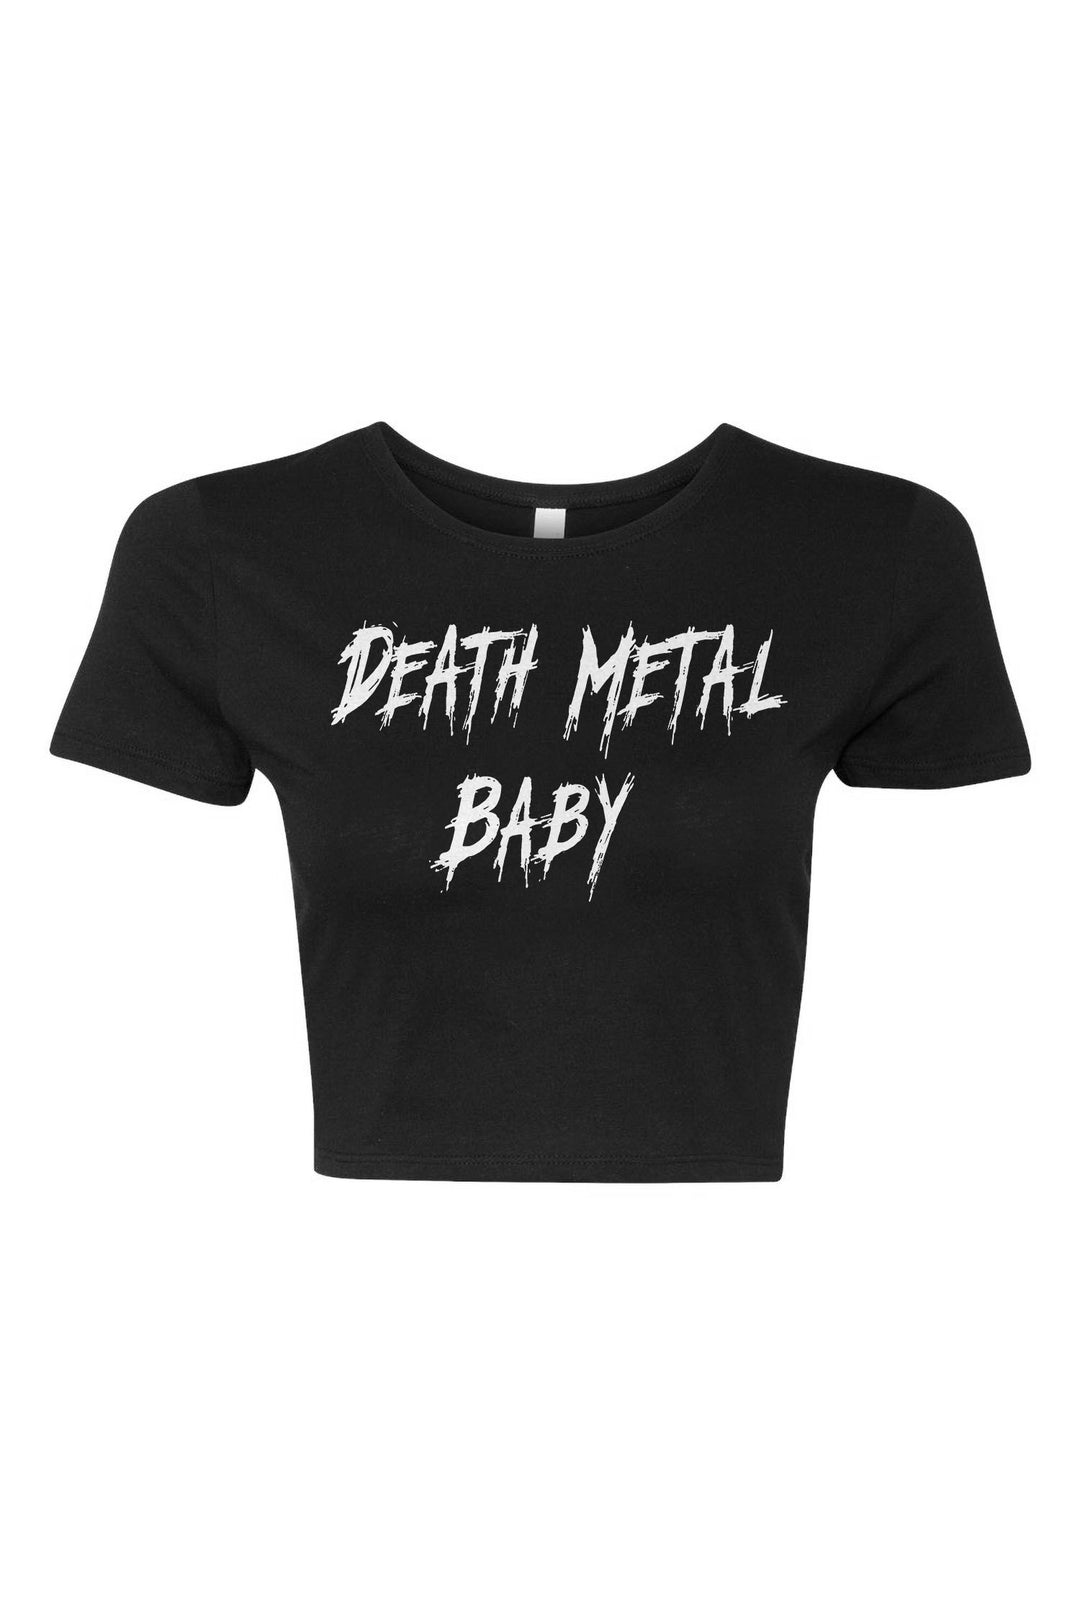 Death Metal Baby Crop Top